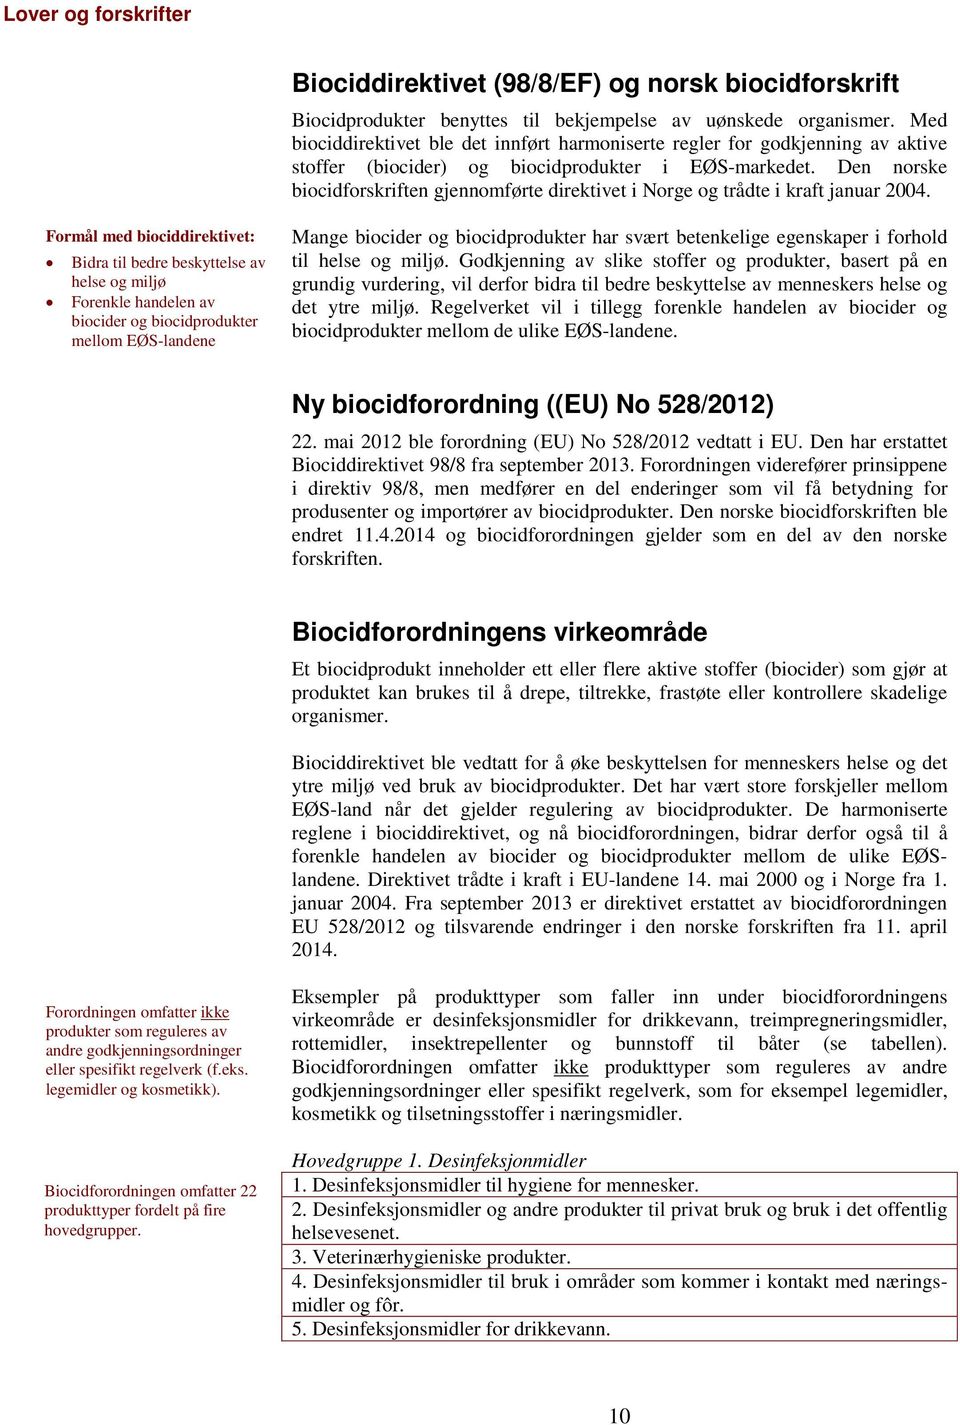 Den norske biocidforskriften gjennomførte direktivet i Norge og trådte i kraft januar 2004.